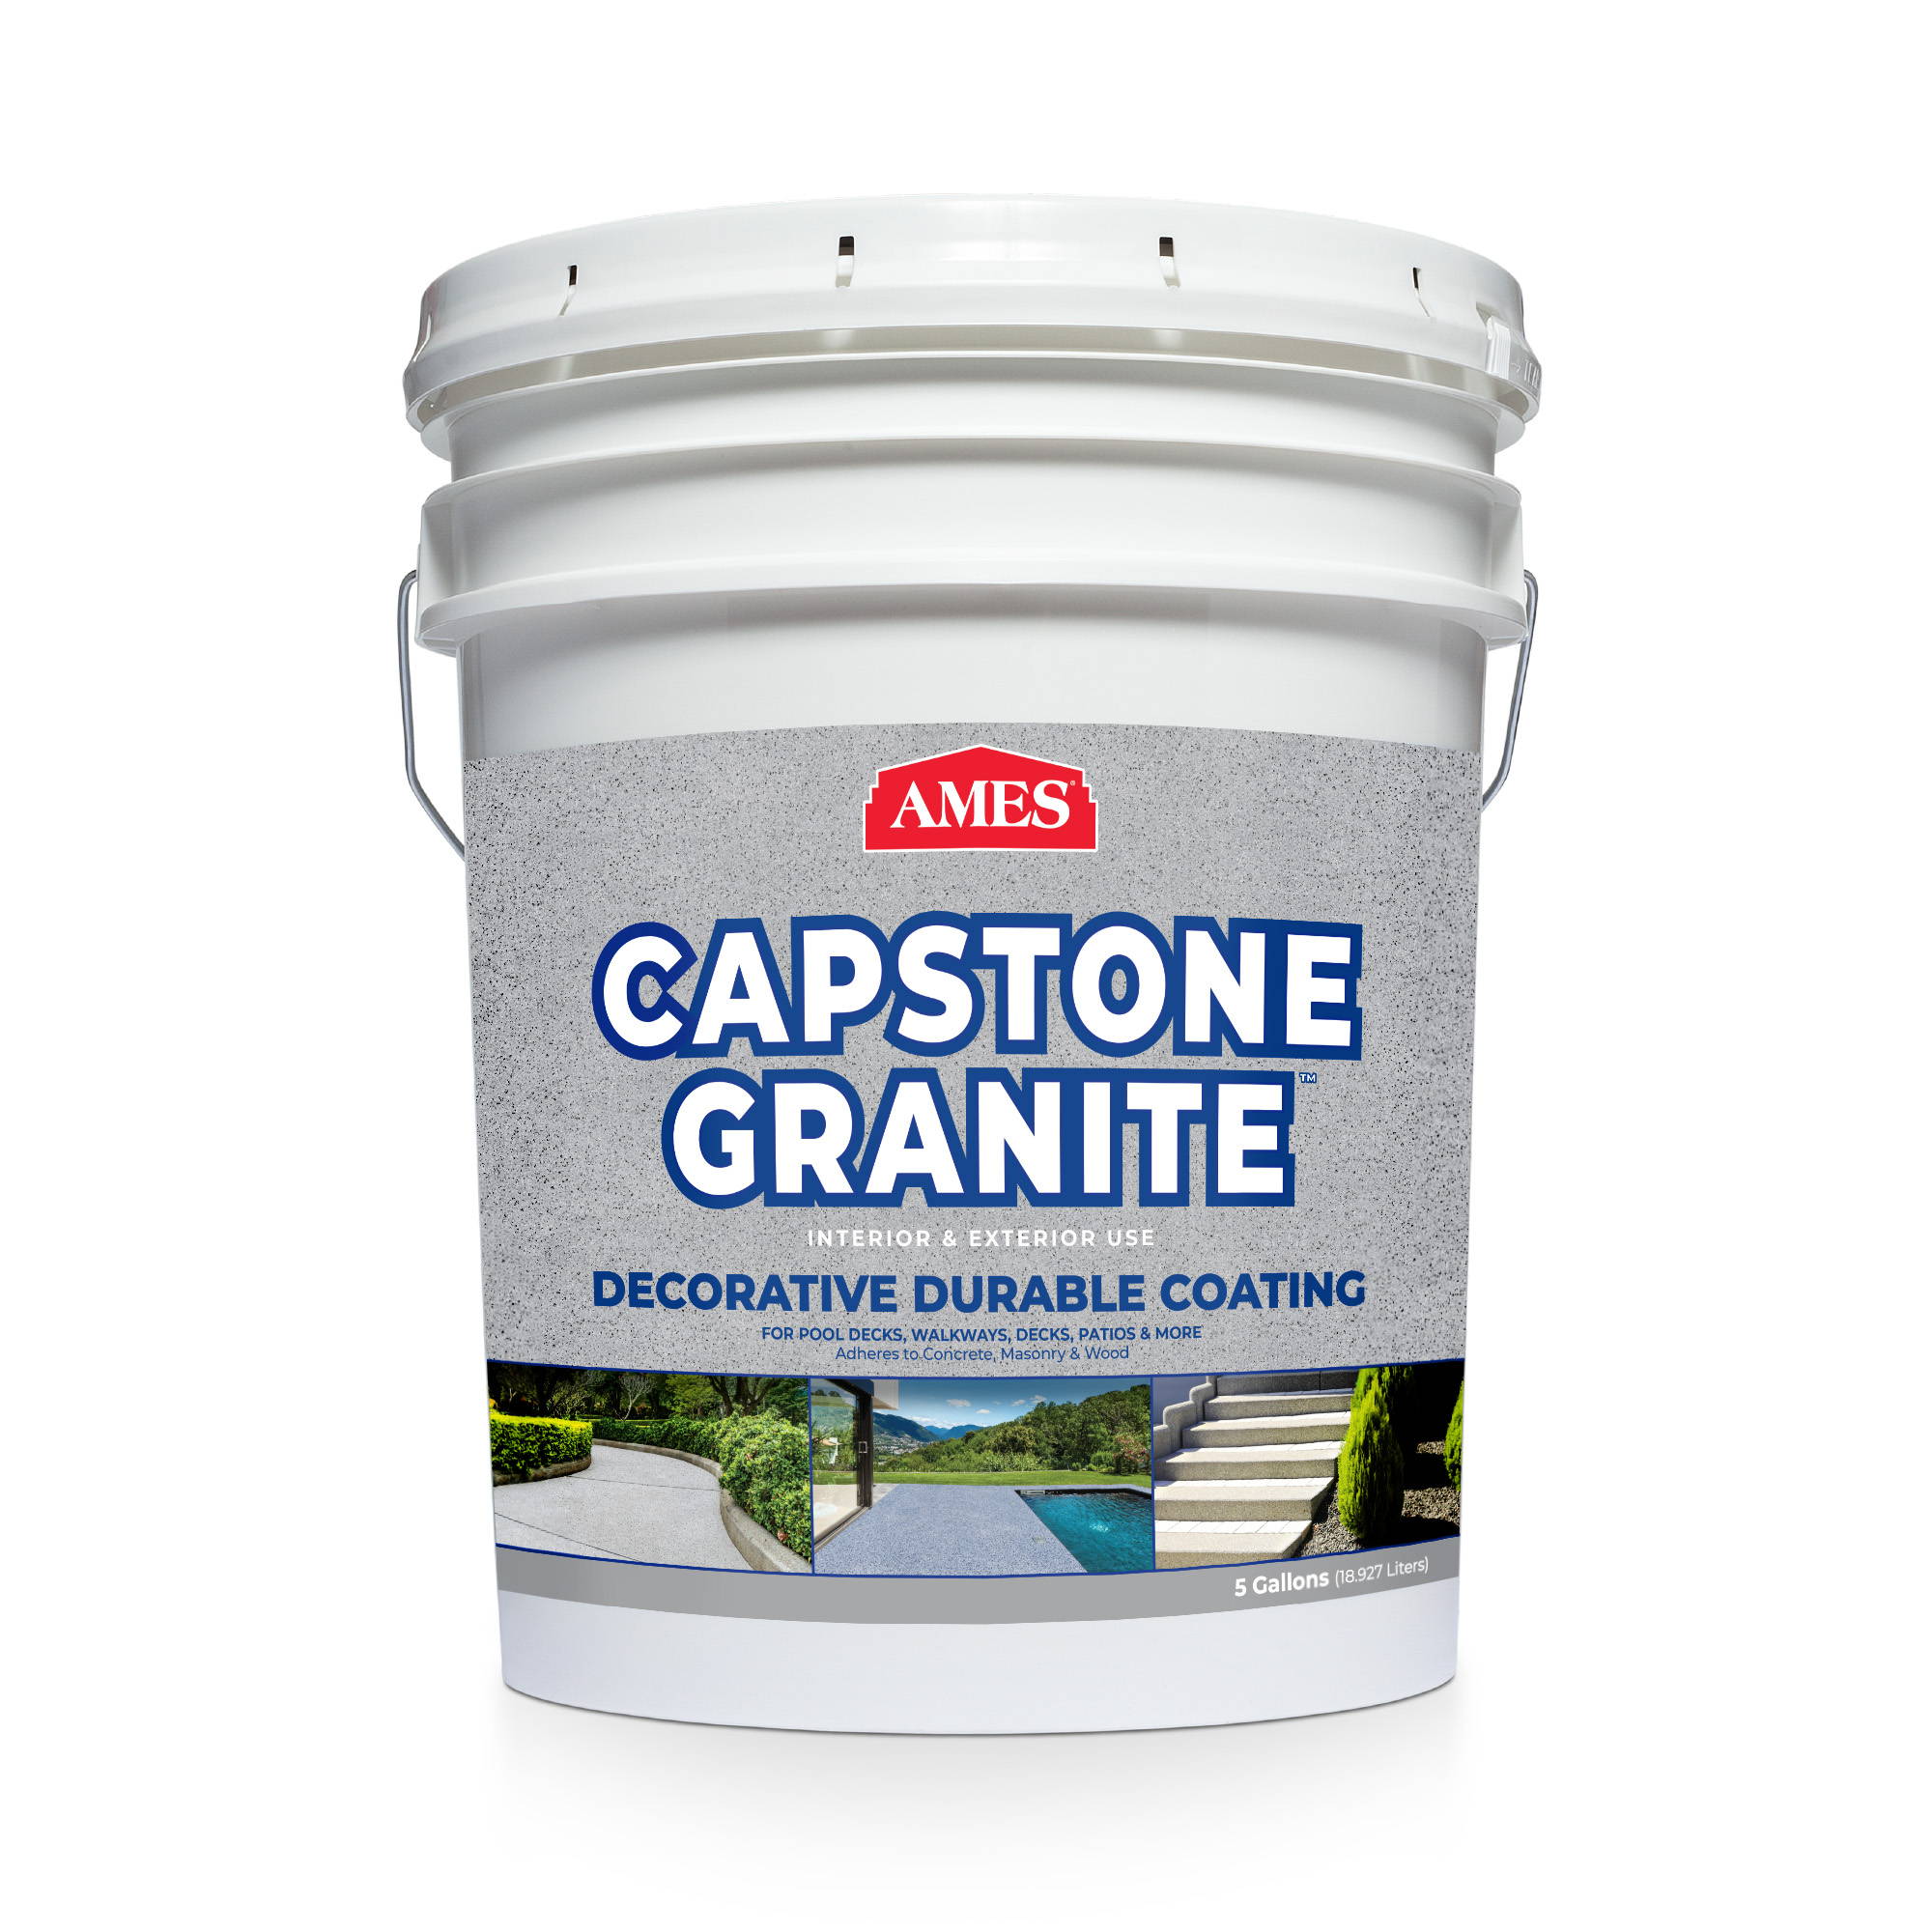 Capstone Granite Coating from AMES